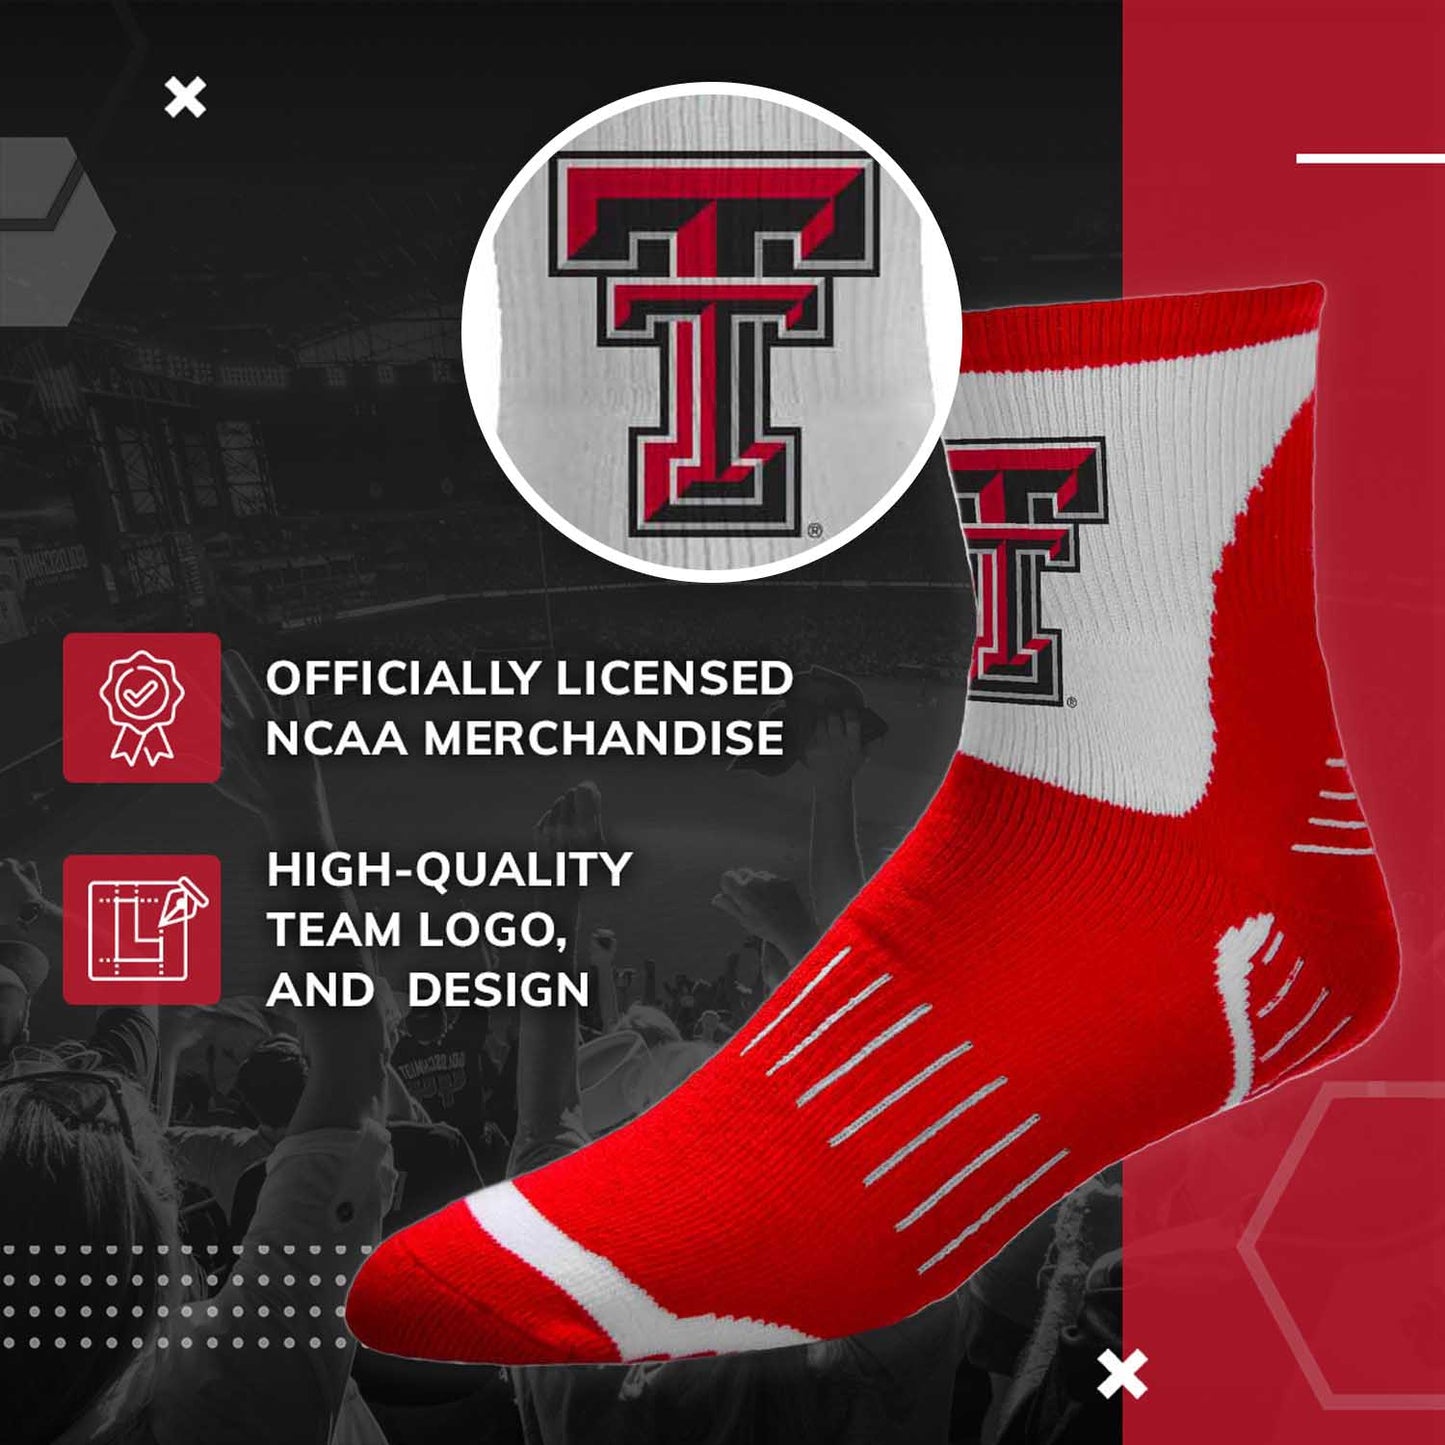 Texas Tech Red Raiders Adult NCAA Surge Quarter Length Crew Socks - Red